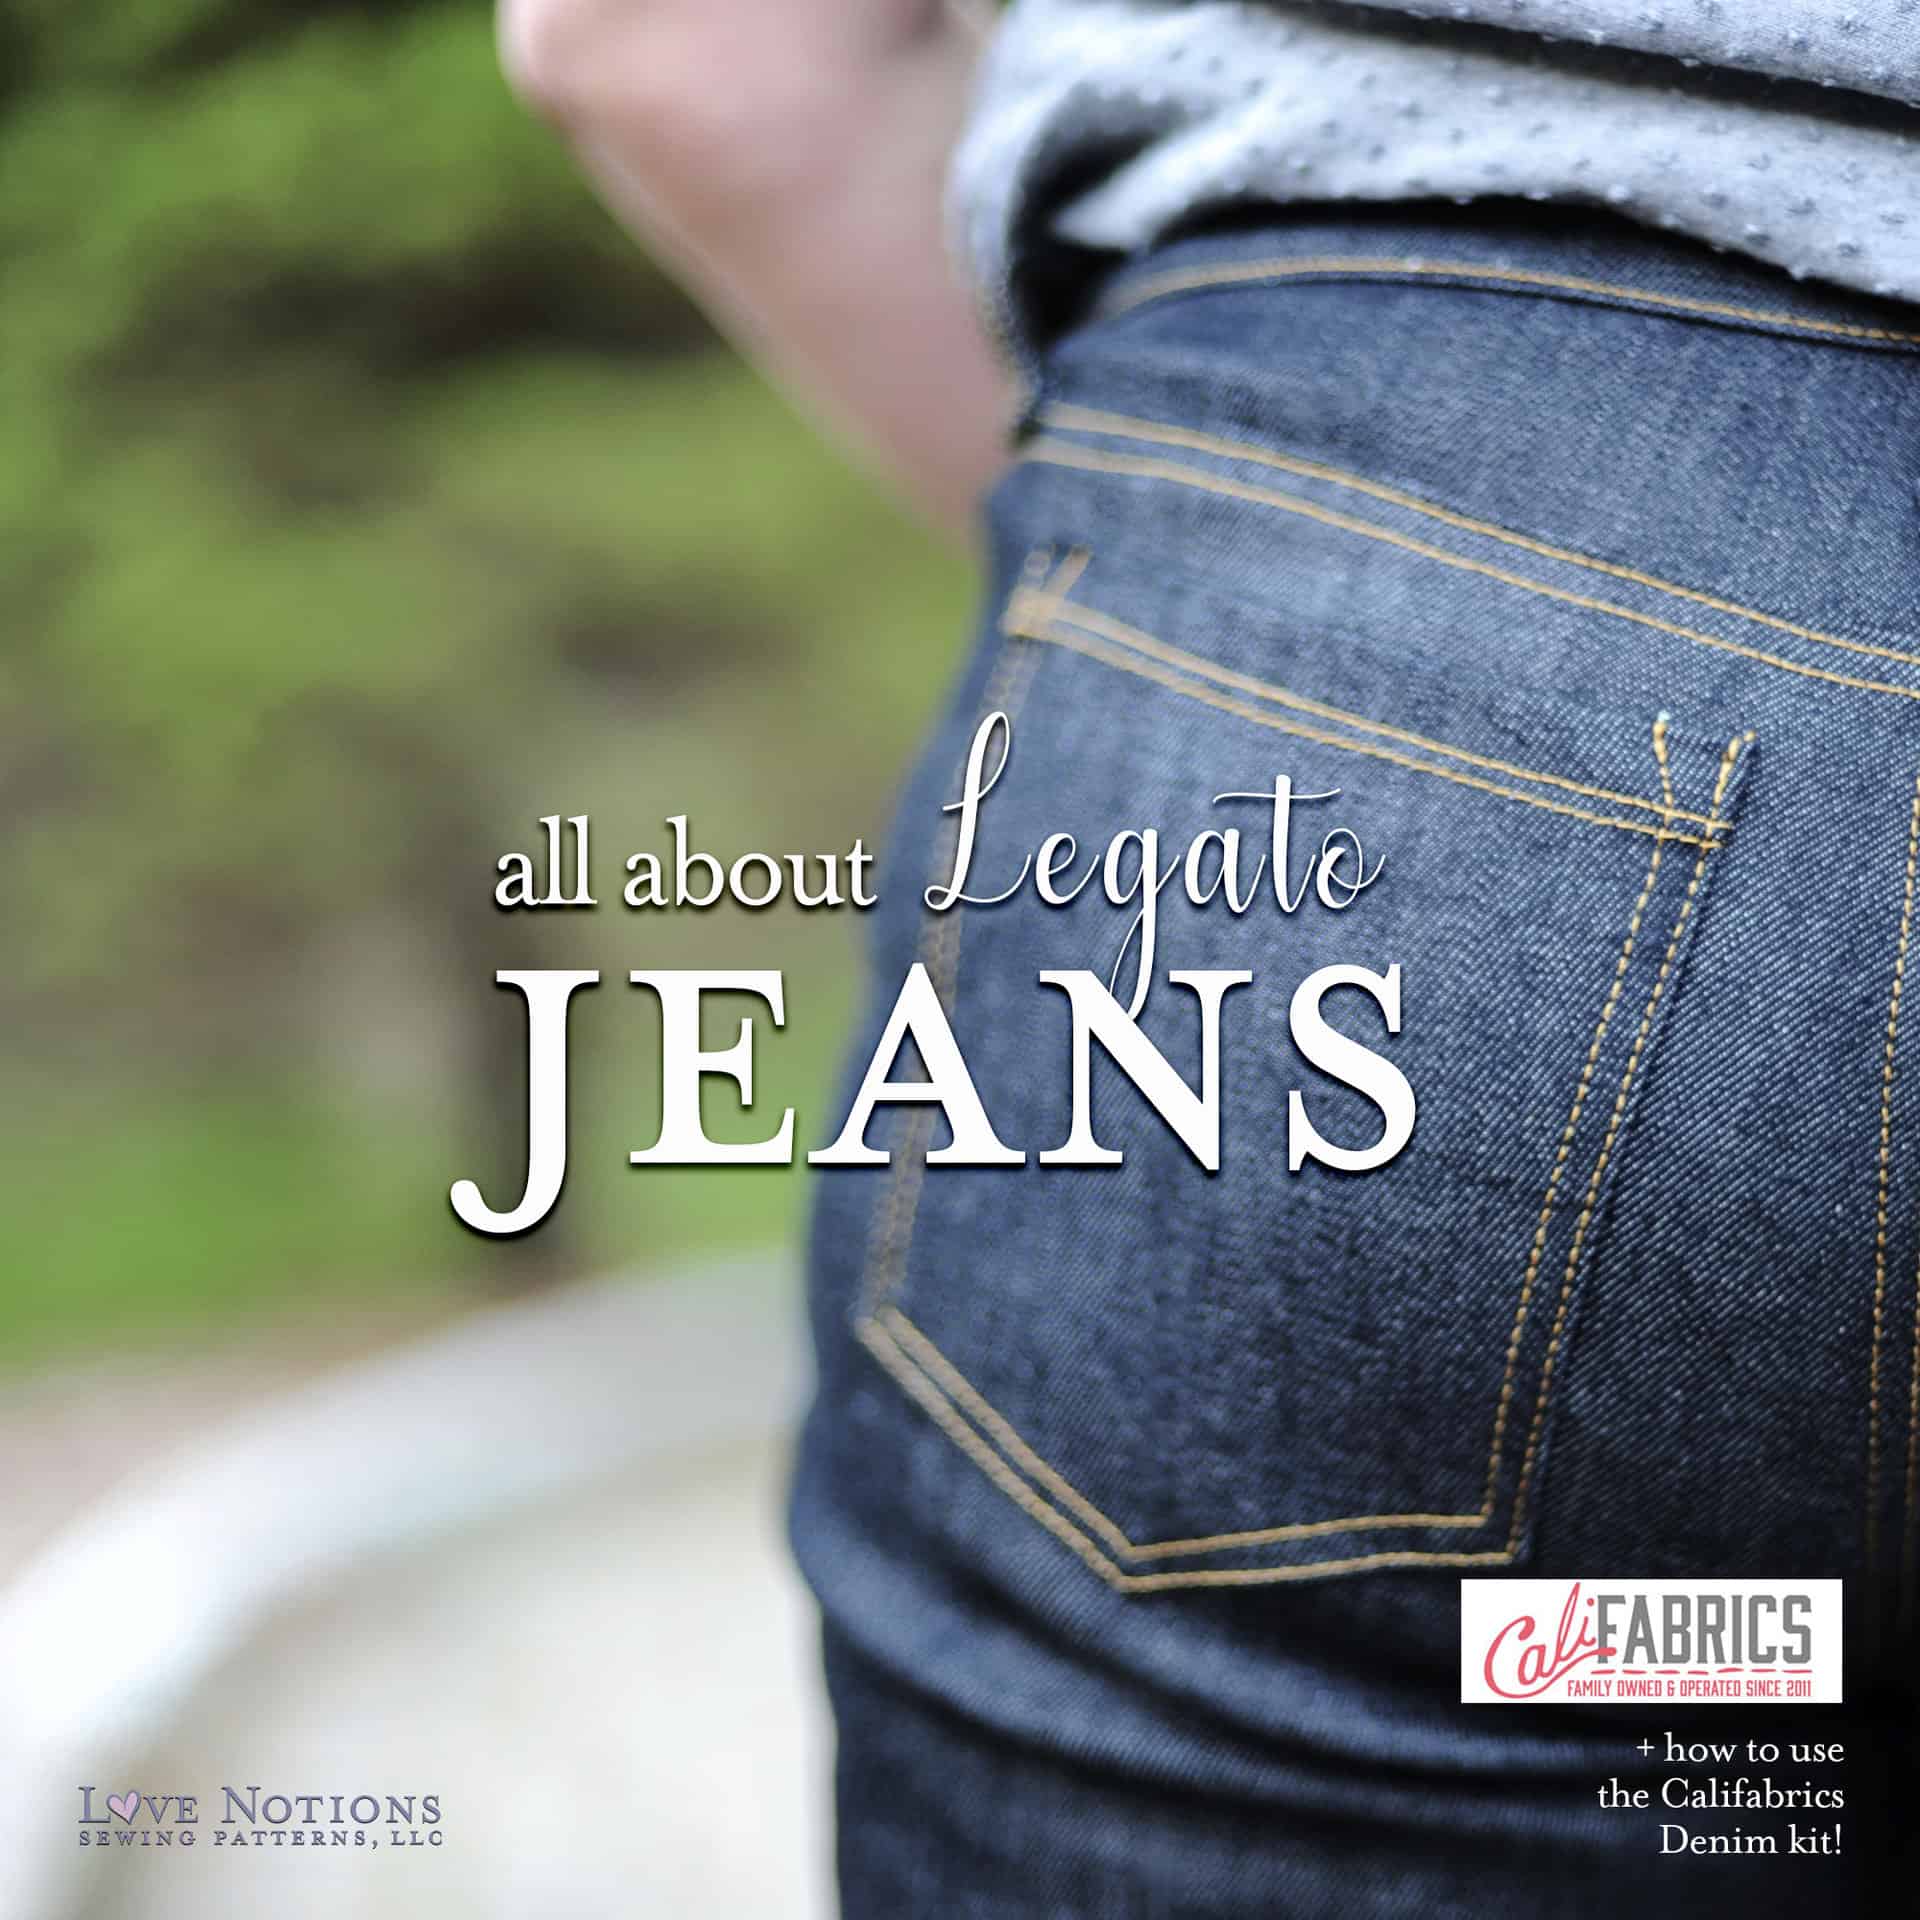 legato jeans